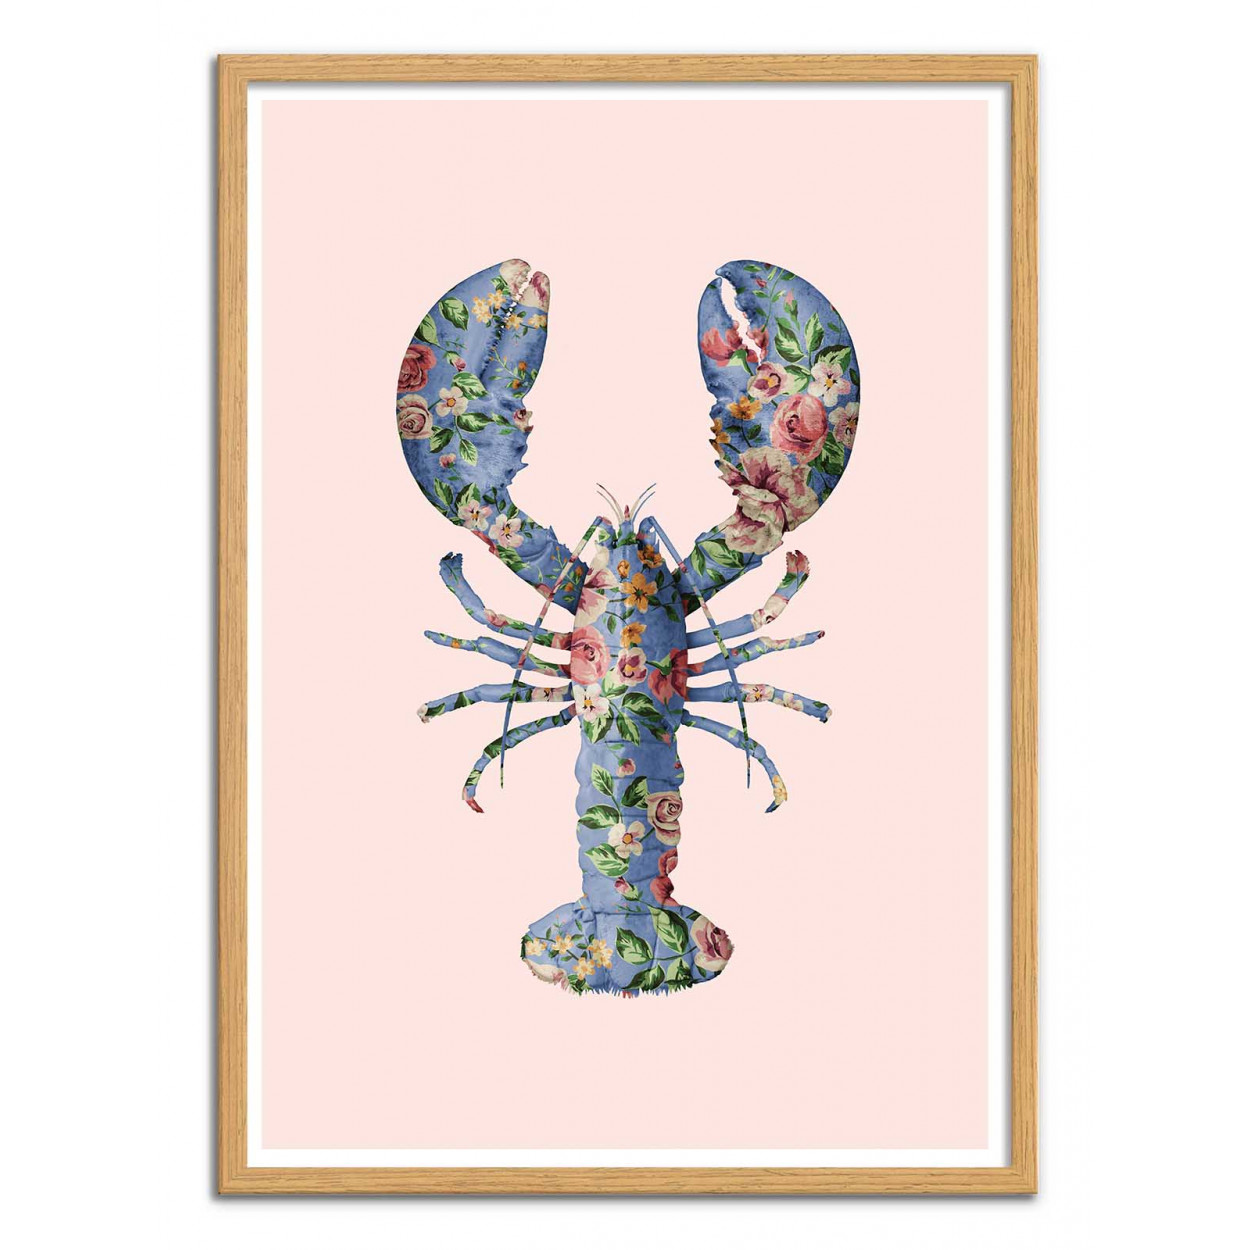 Art-Poster Pop art surrealist - Floral lobster, by Paul Fuentes